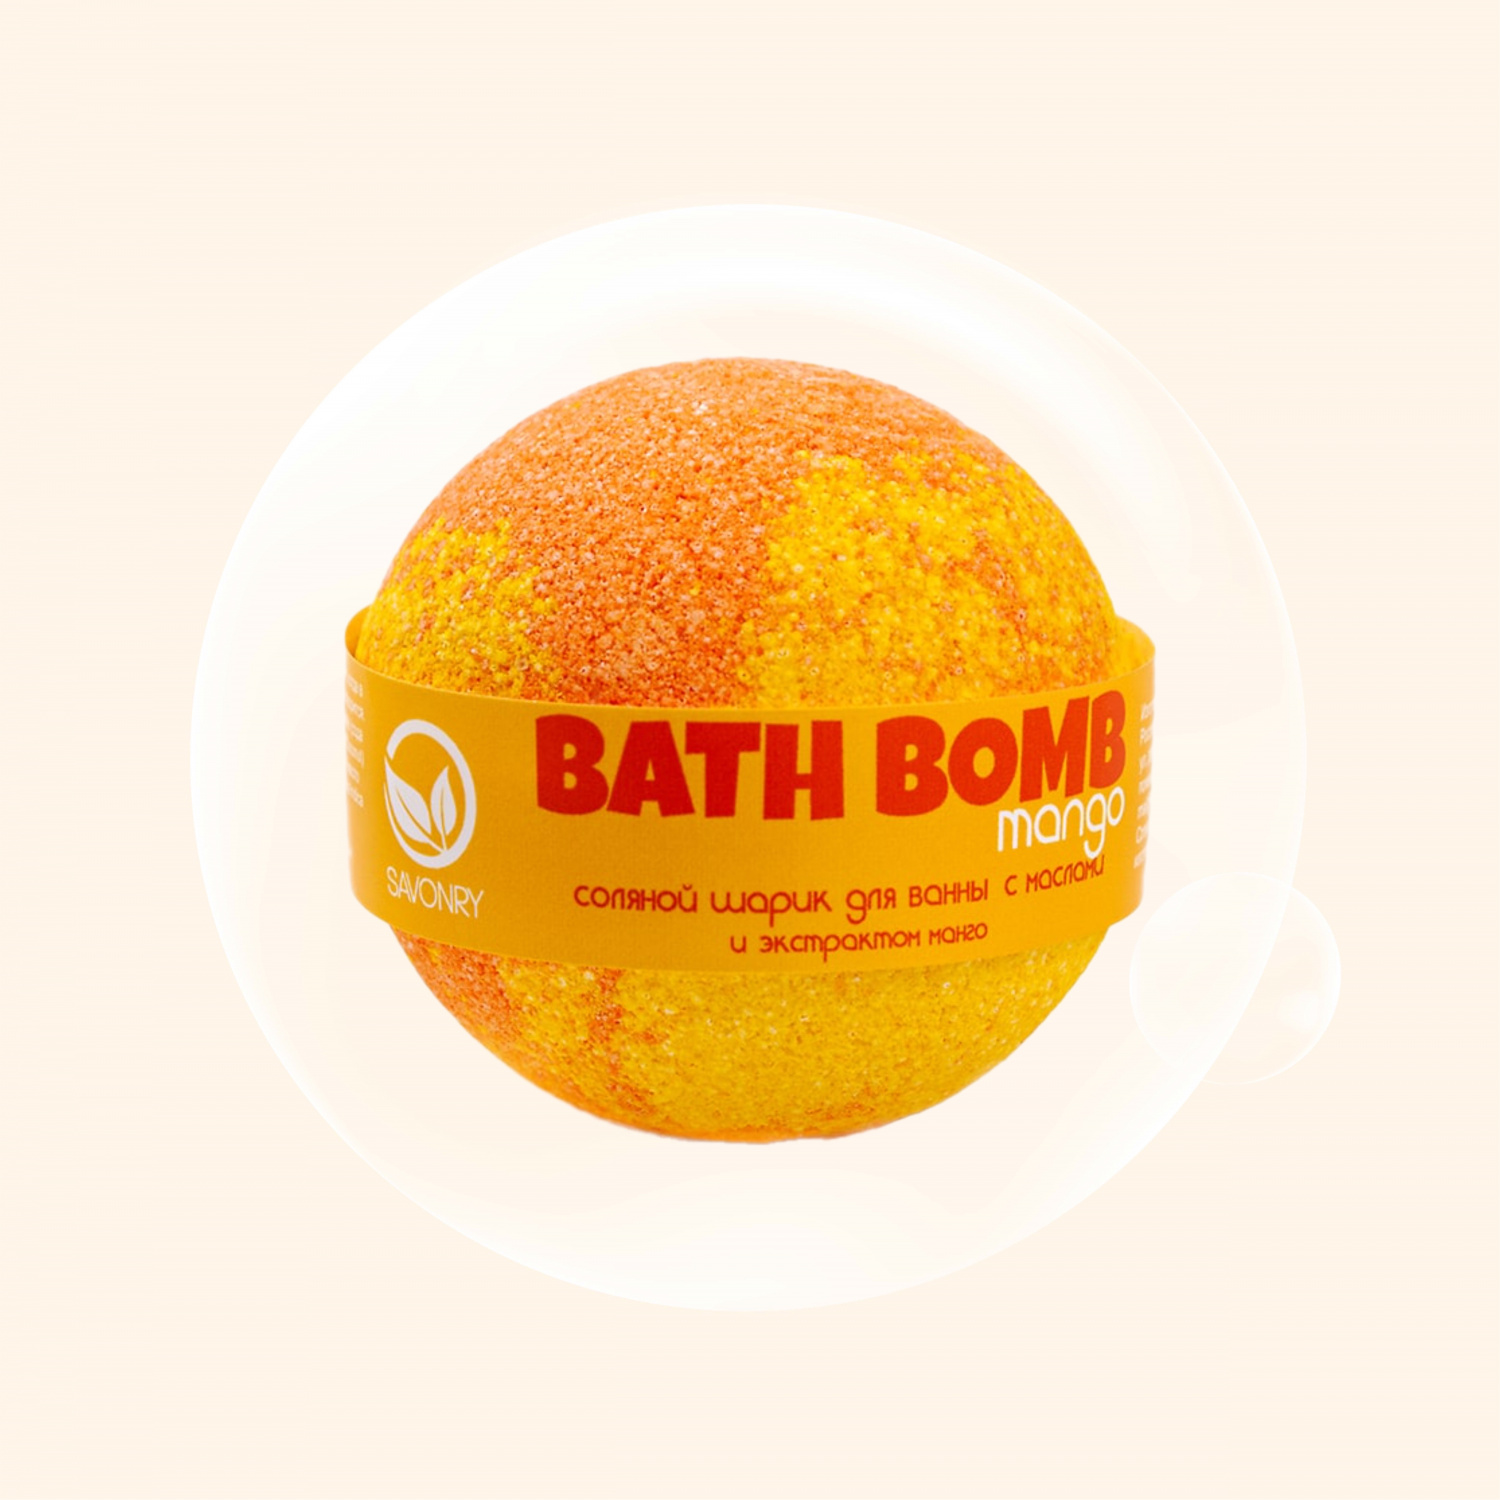 Savonry Bath Bomb Mango 120 г